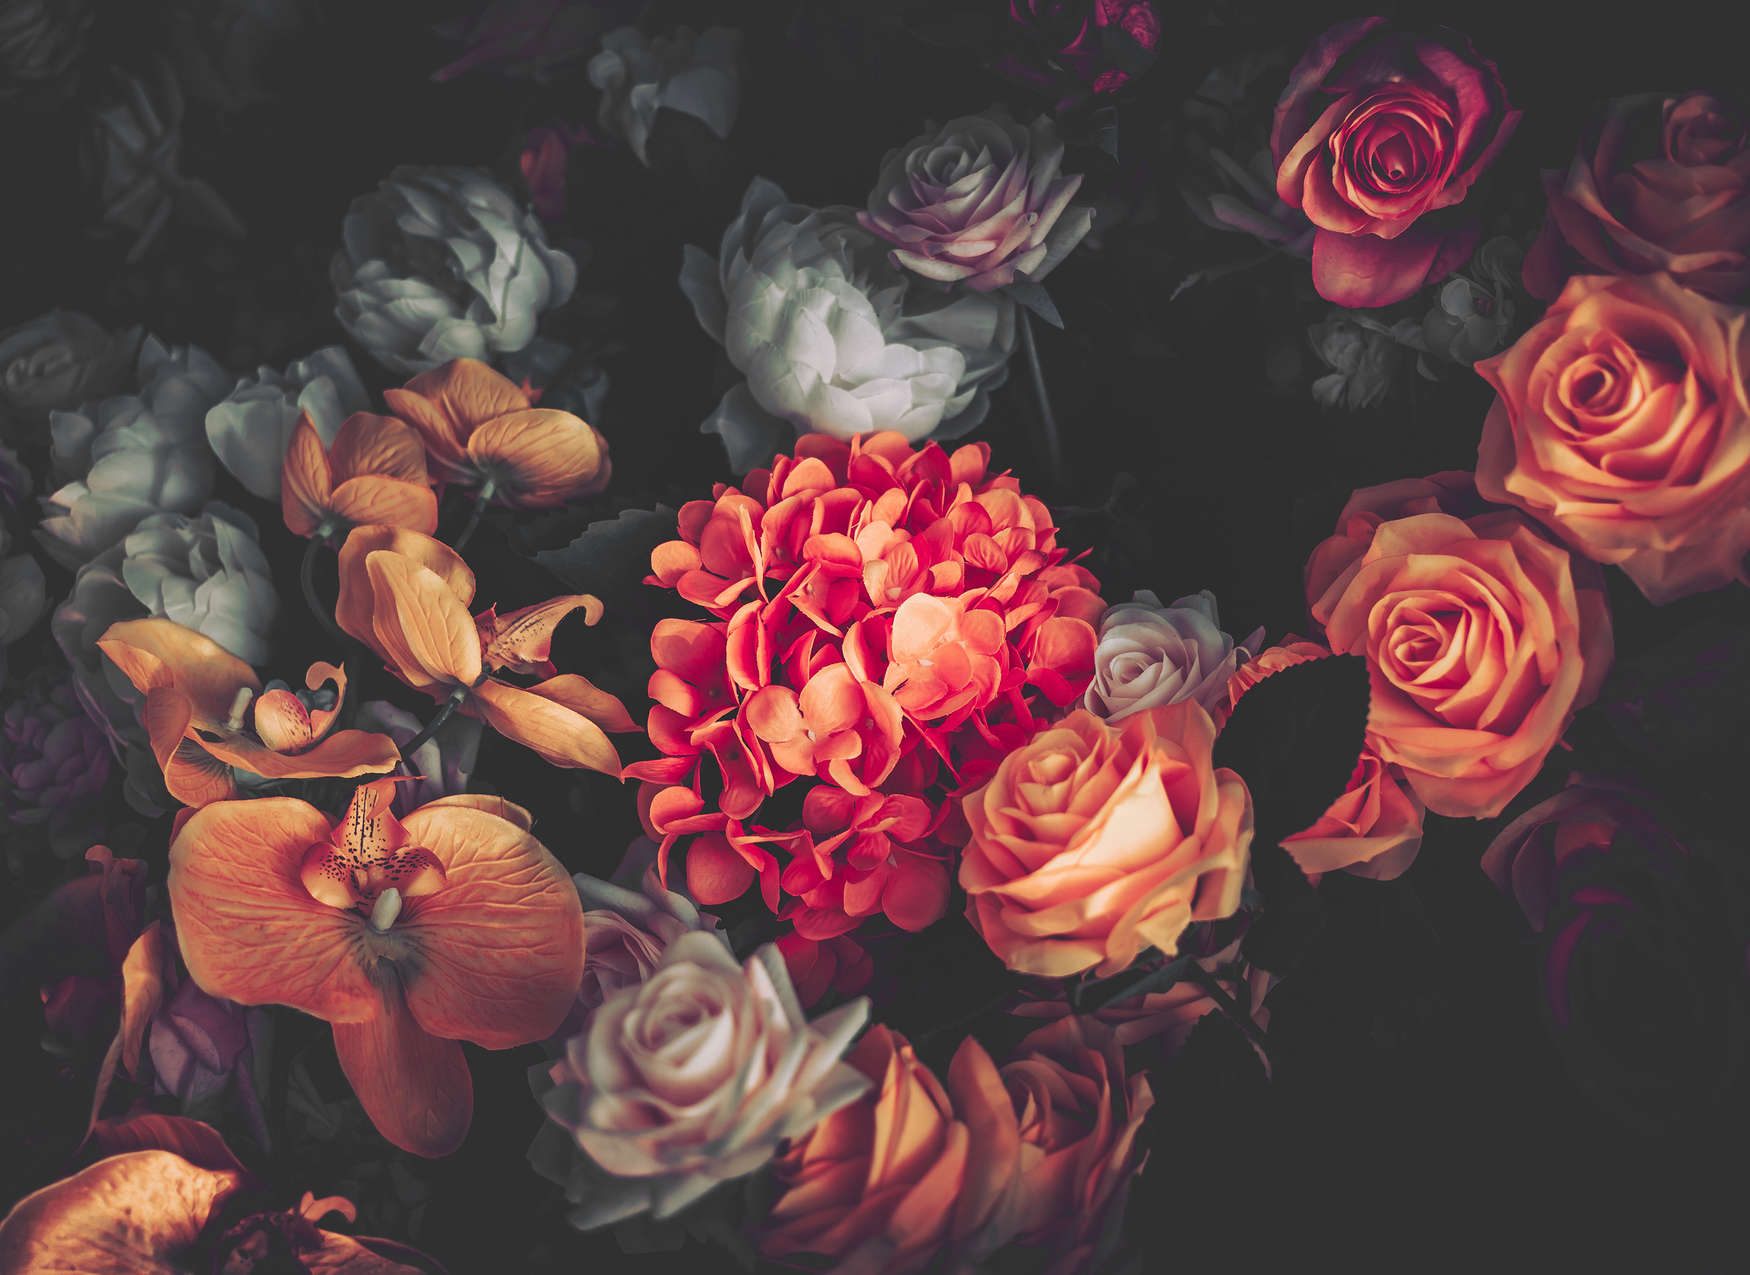             Blumenstrauß Fototapete – Rot, Orange, Rosa
        